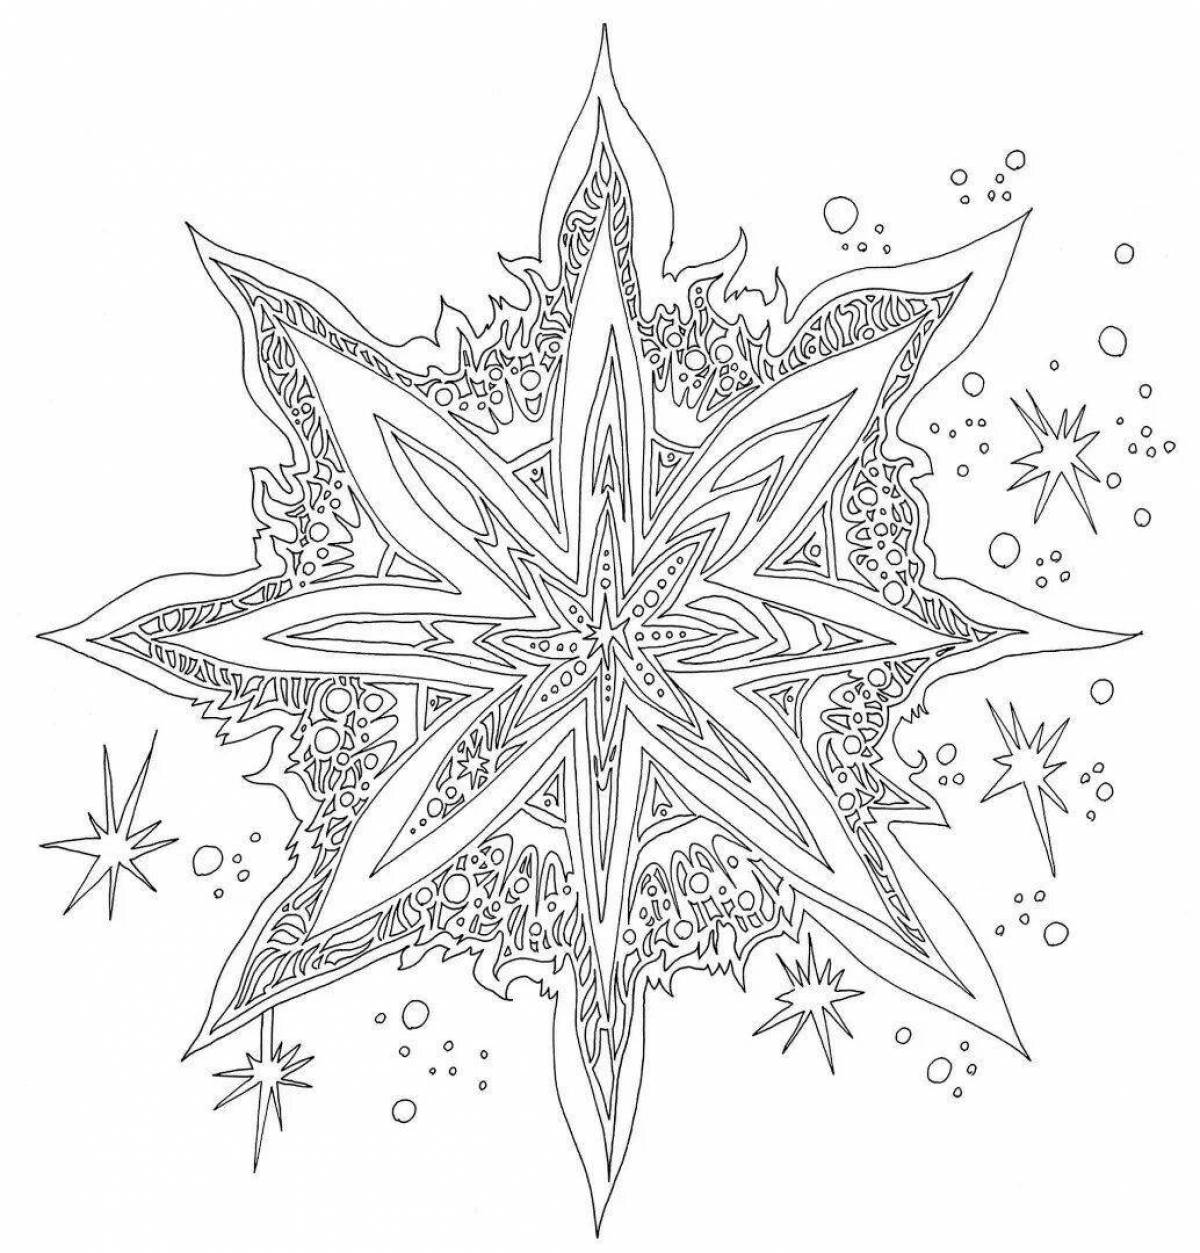 Playful Christmas snowflake coloring book